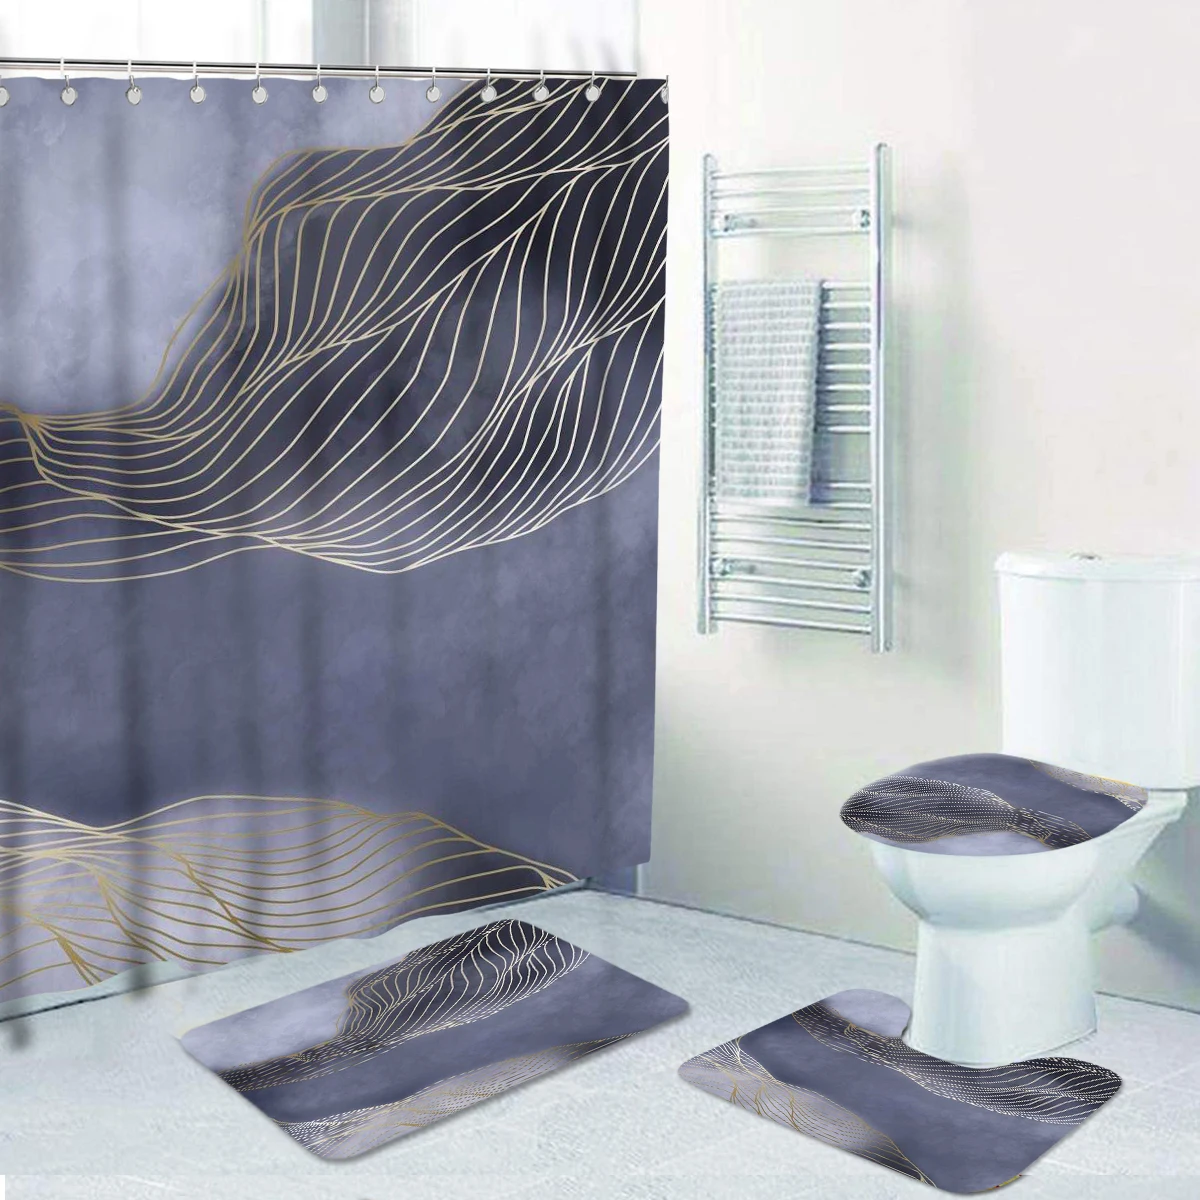 Details about   War-Horse Shower Curtain Bathroom Rug Set Bath Mat Non-Slip Toilet Lid Cover 